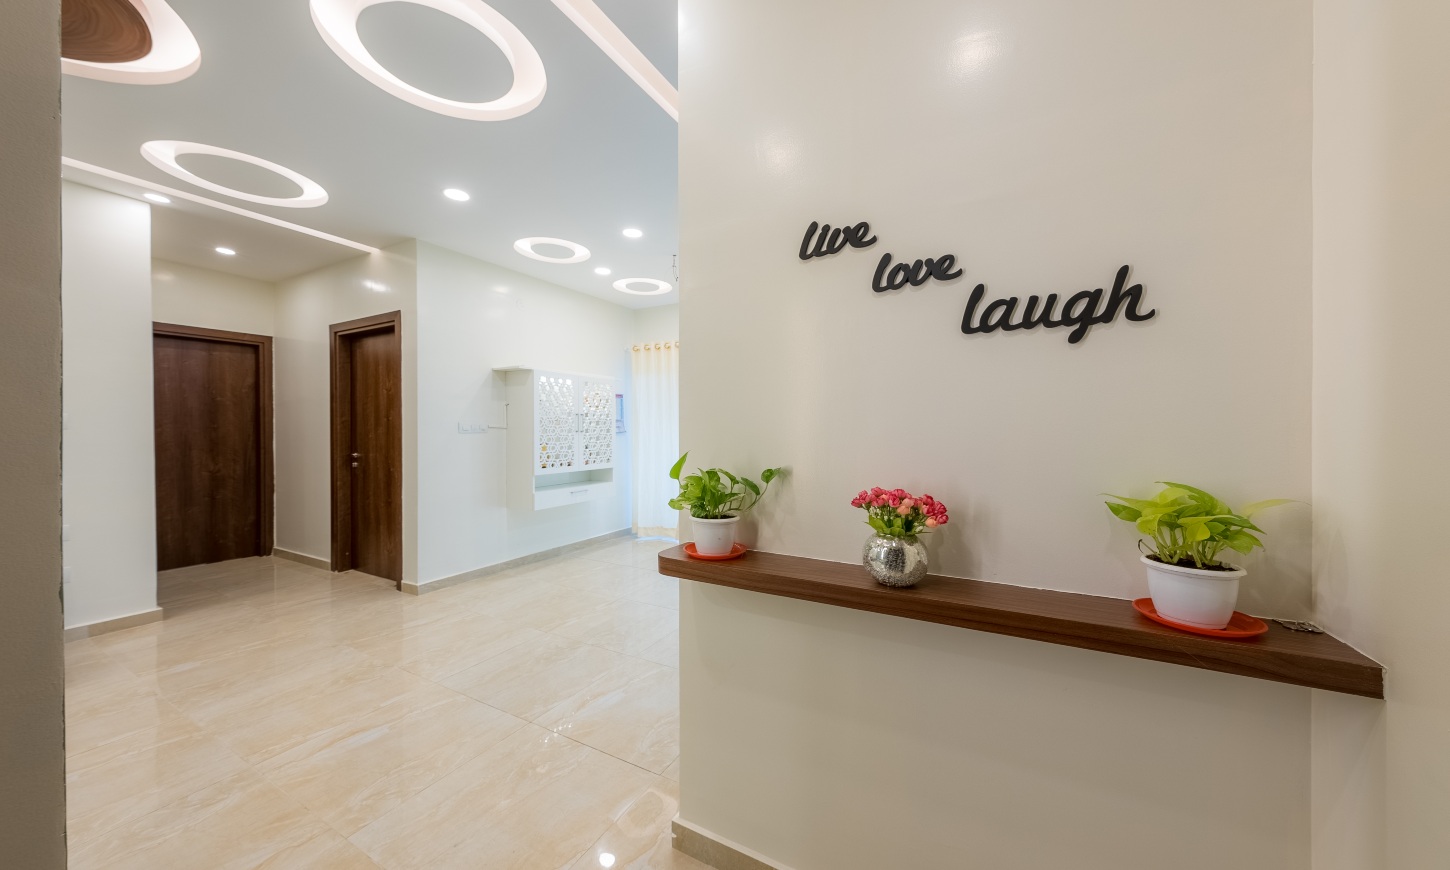 Designcafe designed a minimalist entrance for Assetz 63 degree apartment, Sarjapur Road